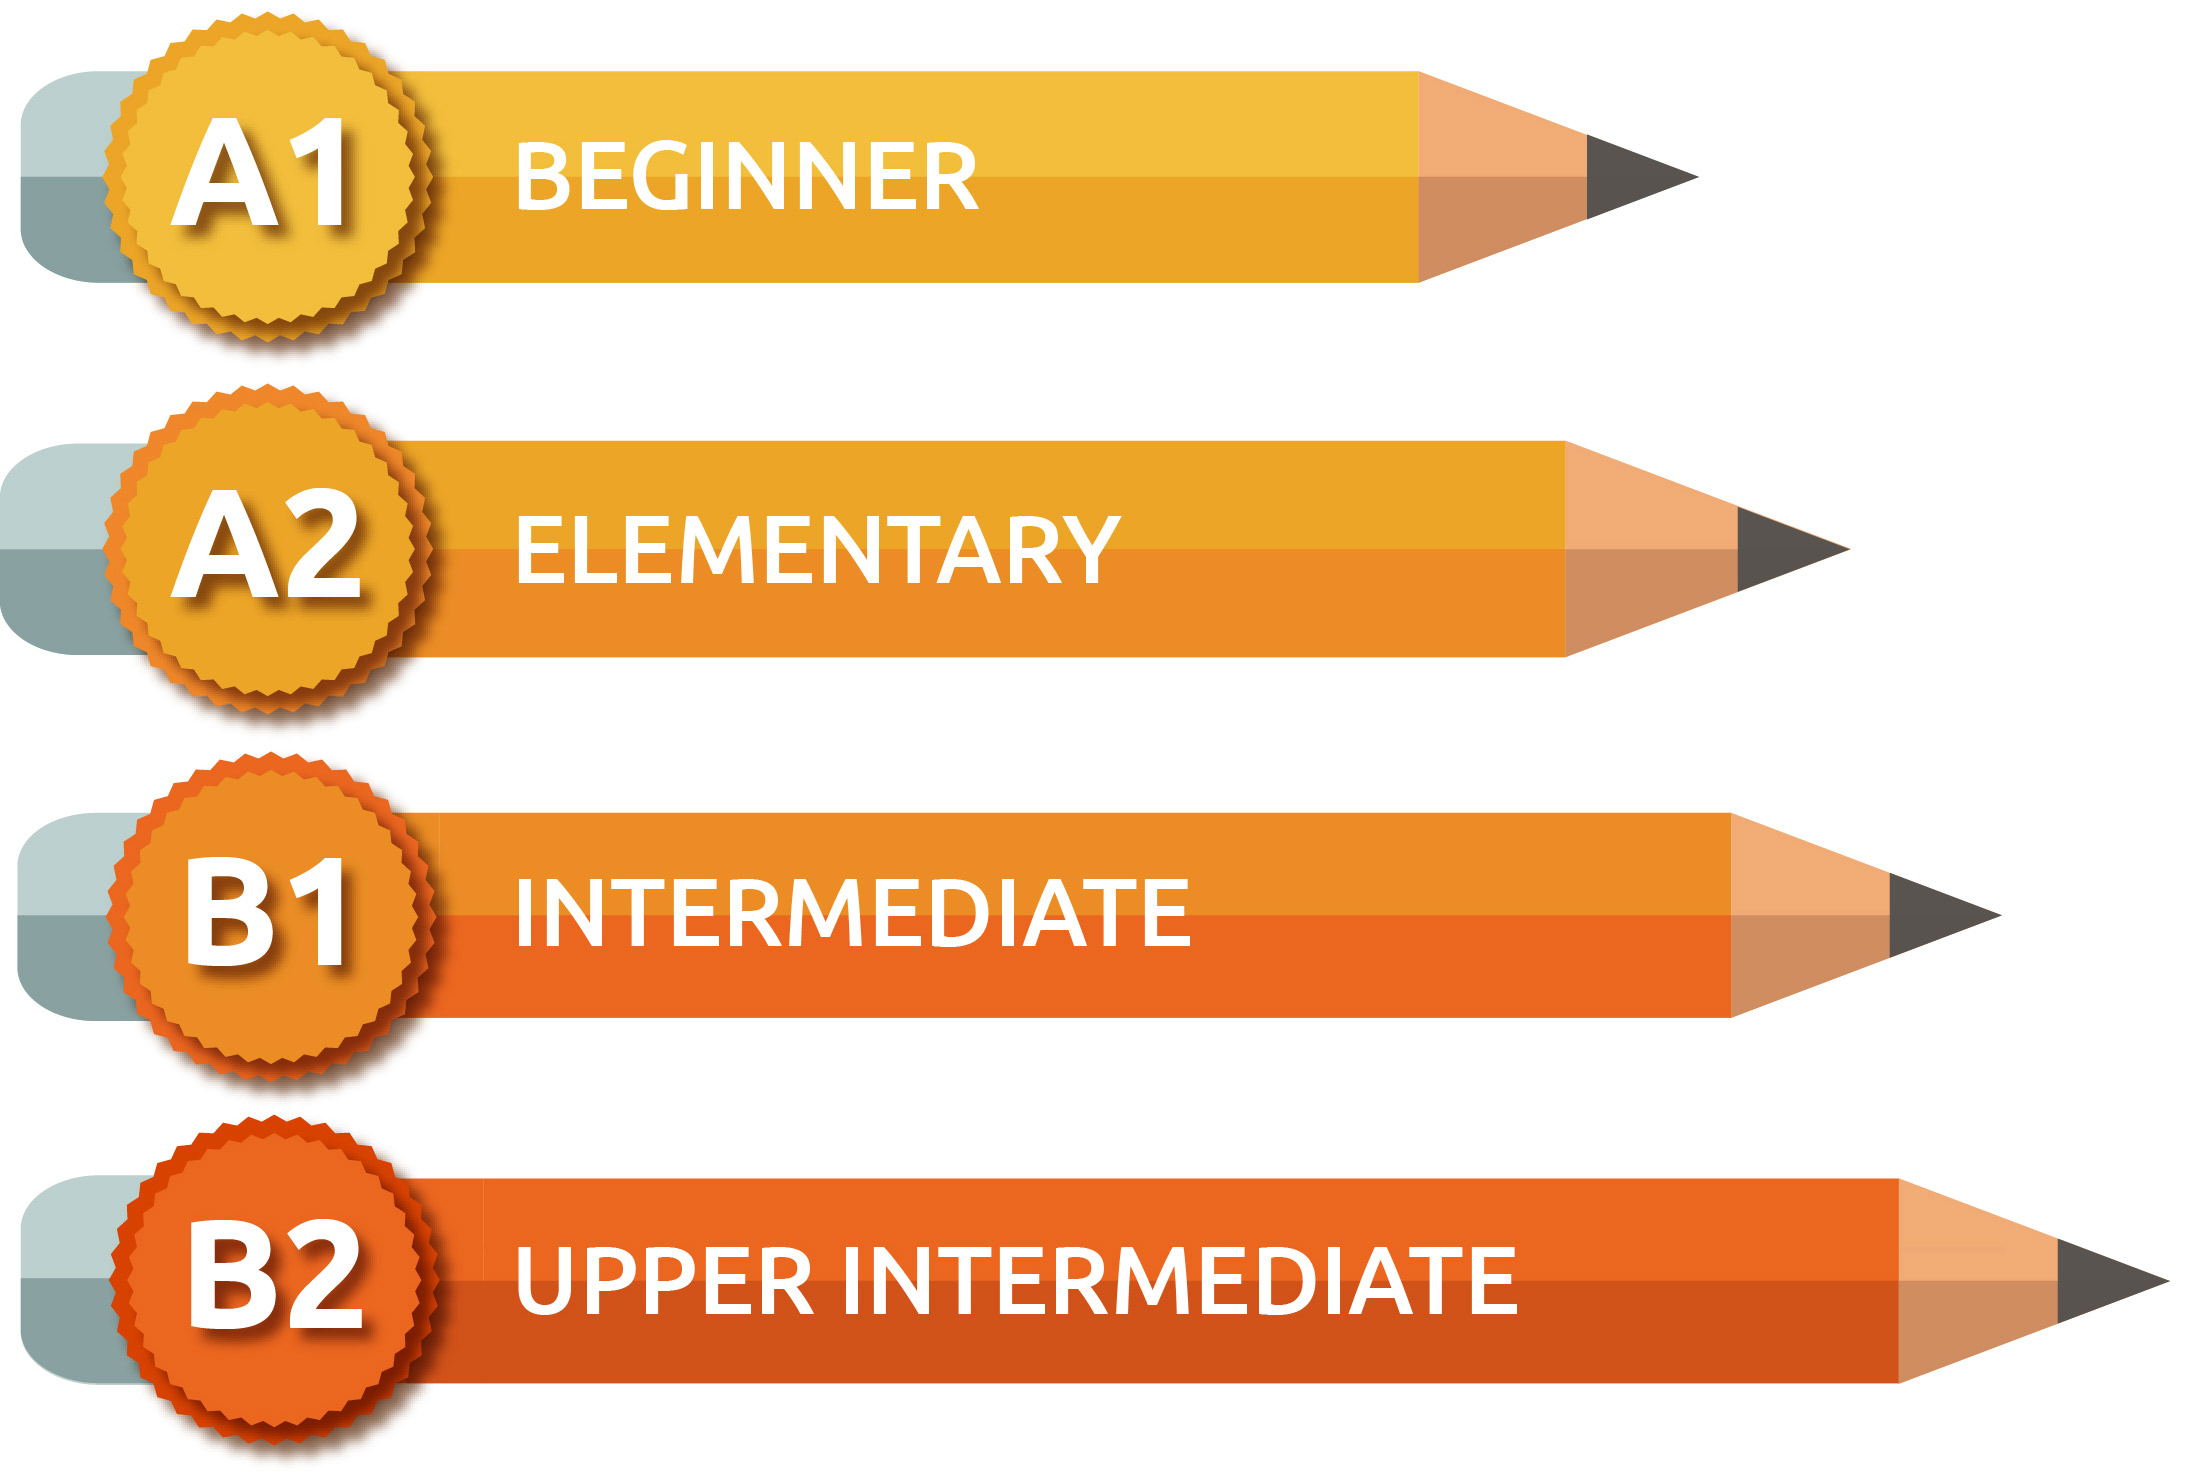 Elementary перевод. Уровень Beginner/Elementary. Upper Intermediate уровень. Уровни языка Elementary Beginner. Beginner Intermediate.